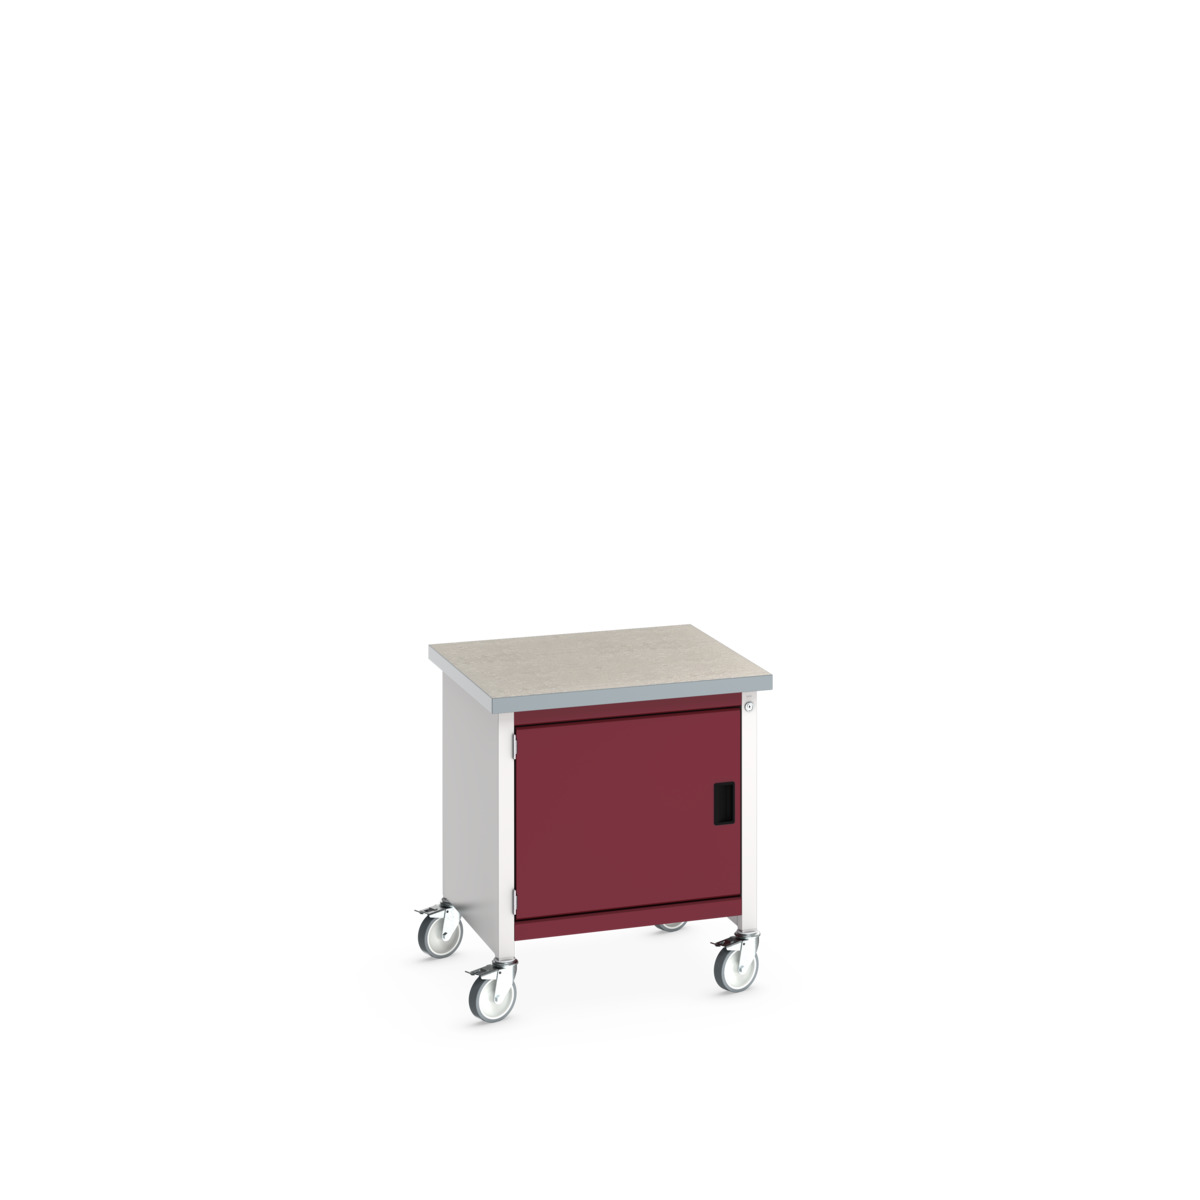 41002087.24V - cubio mobile storage bench (lino)